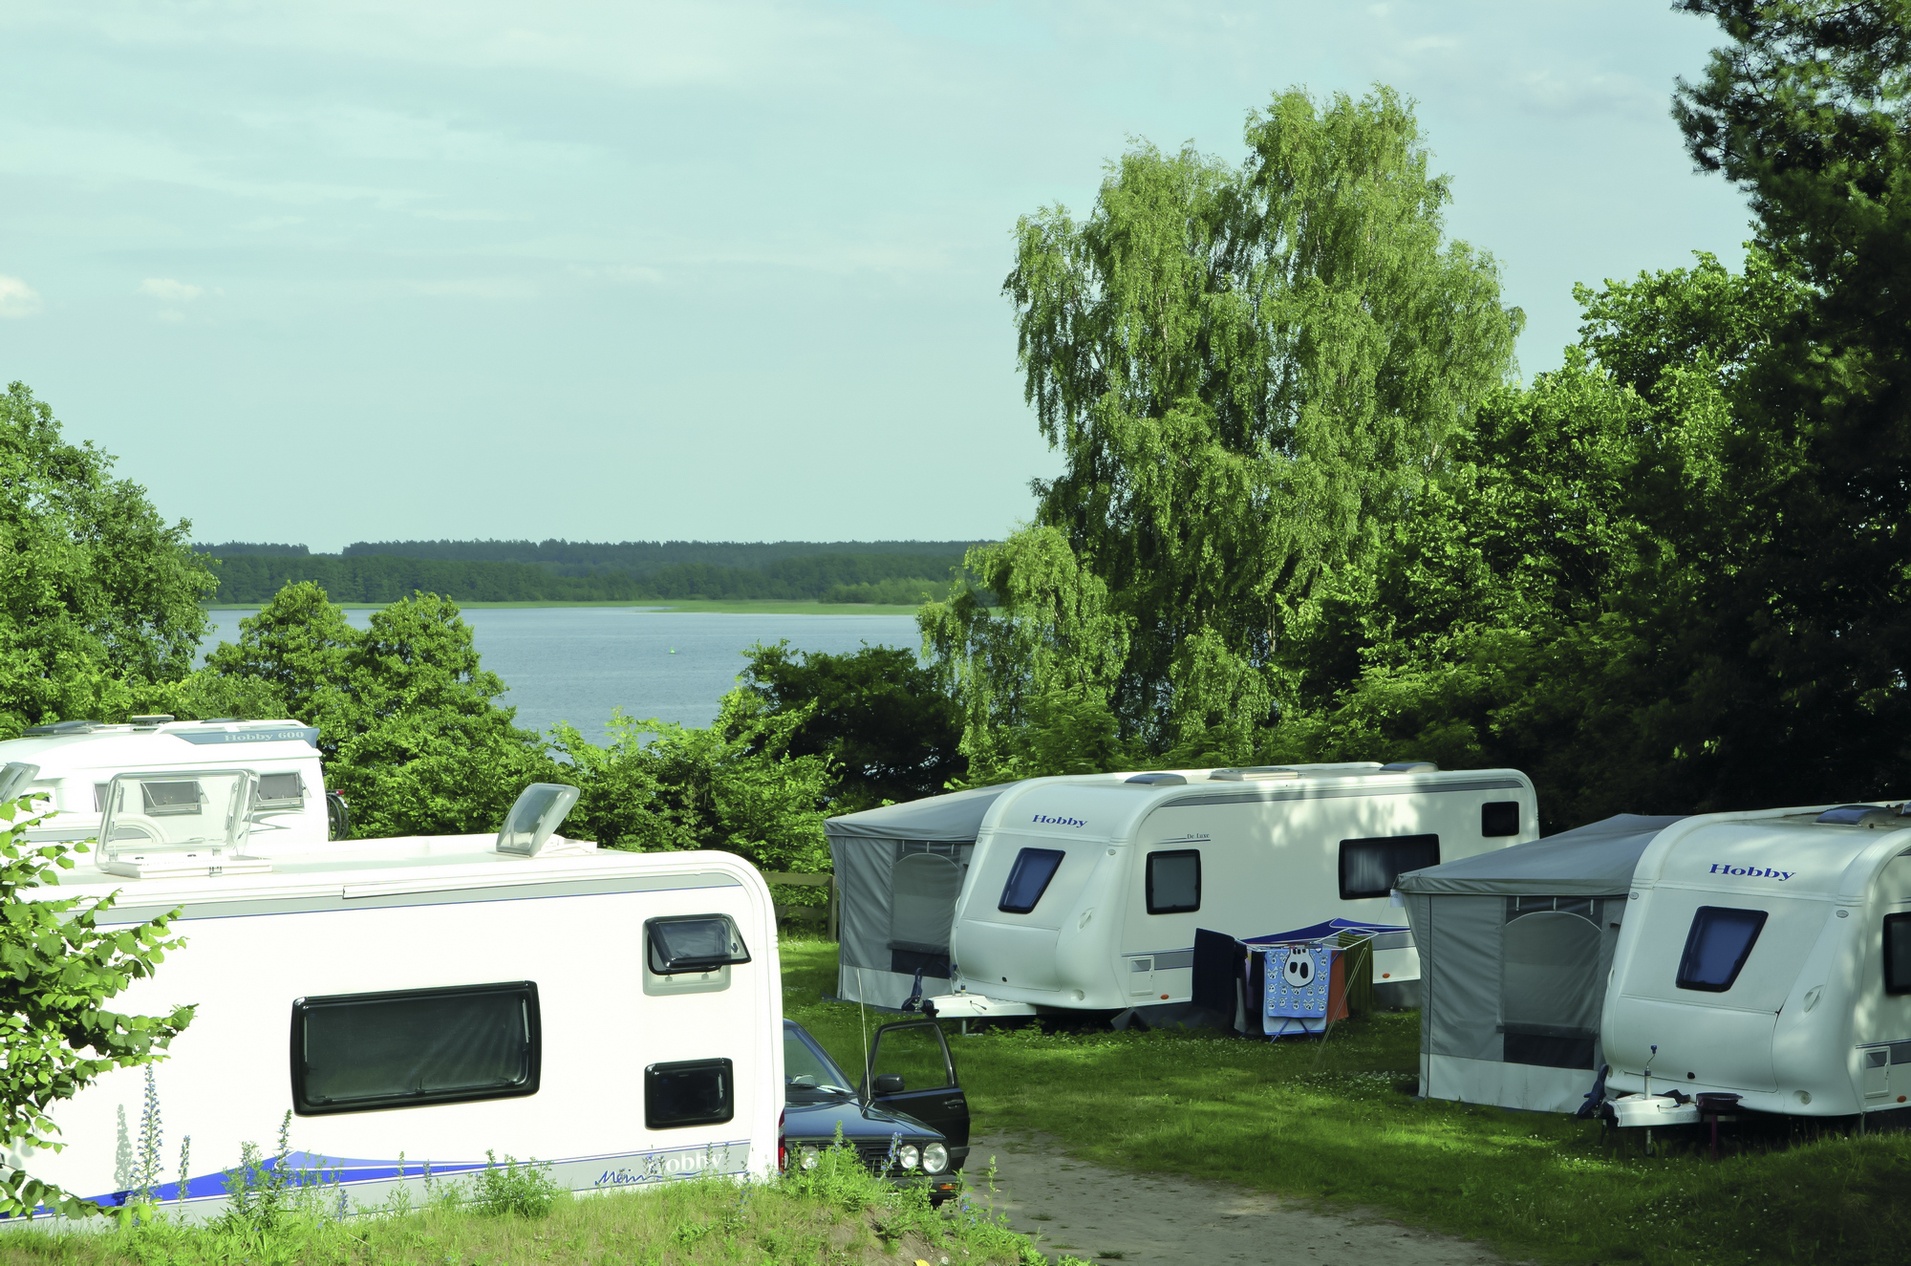 Campingpark Havelberge